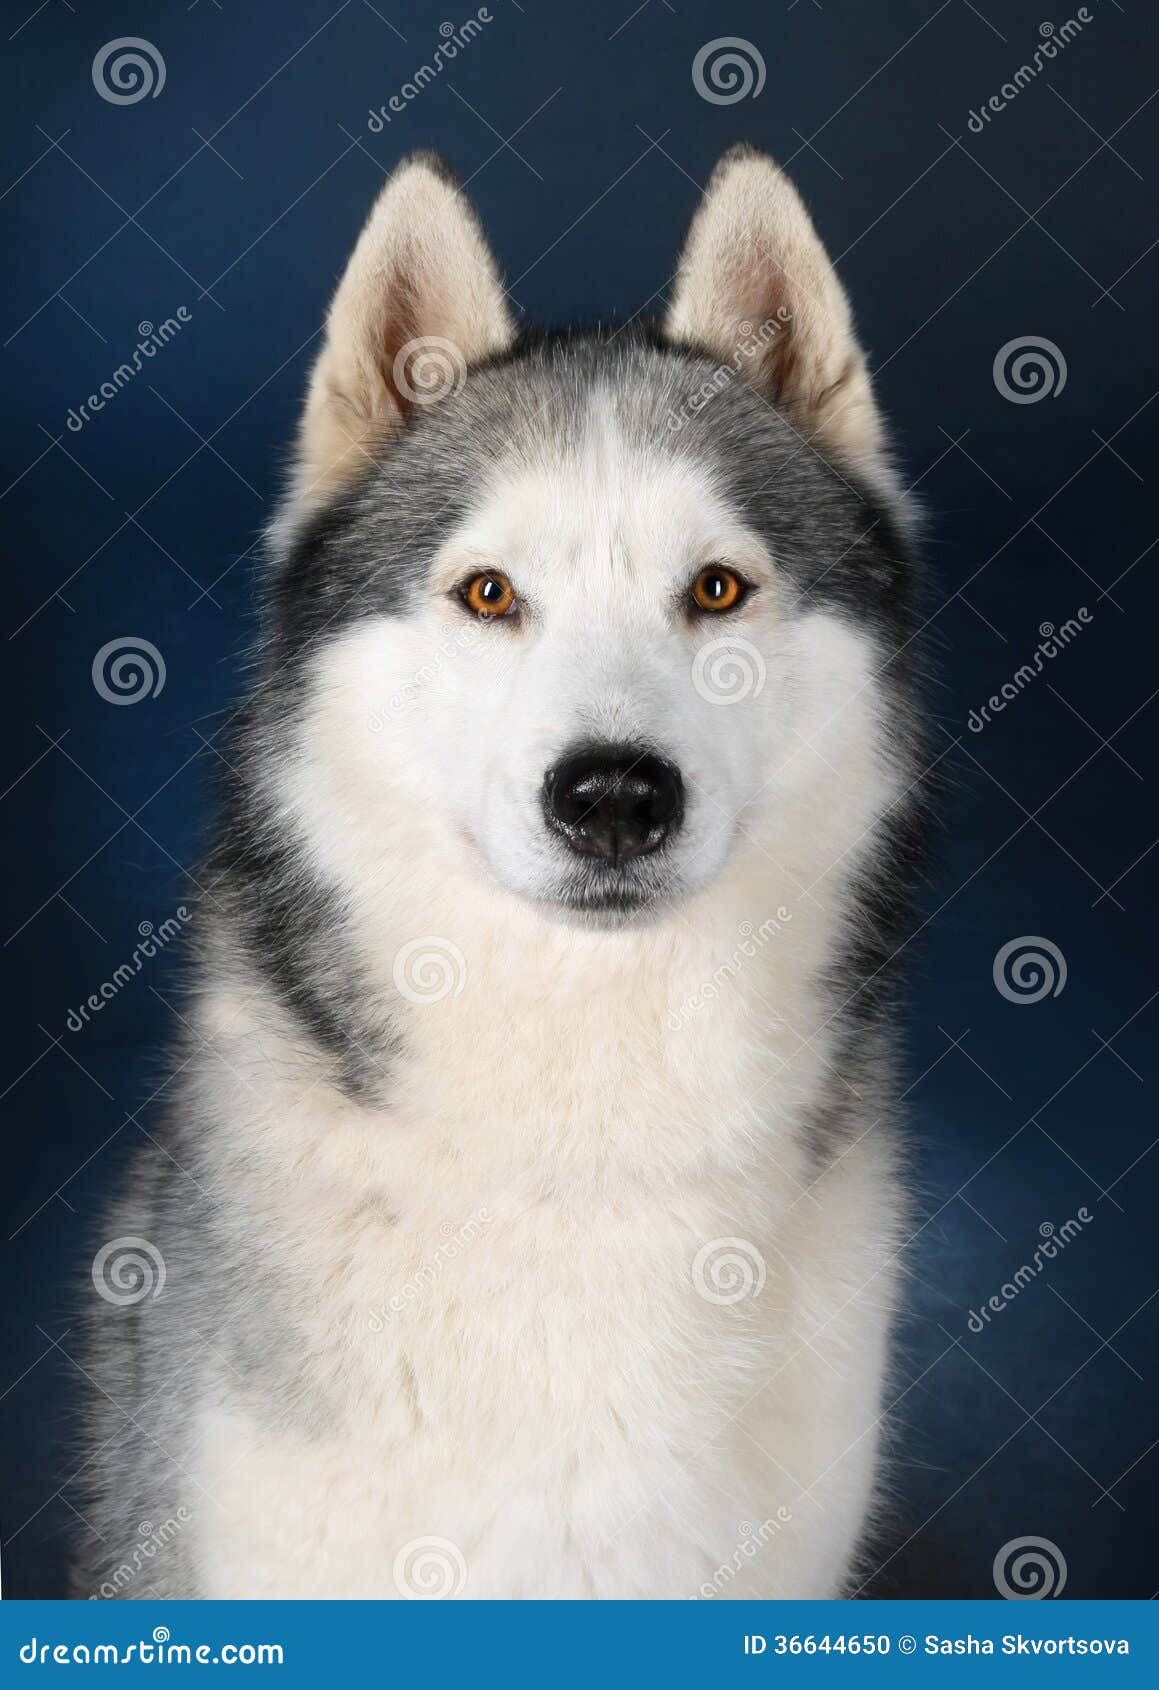 Siberian Husky stock photo. Image of smart, attentive - 36644650